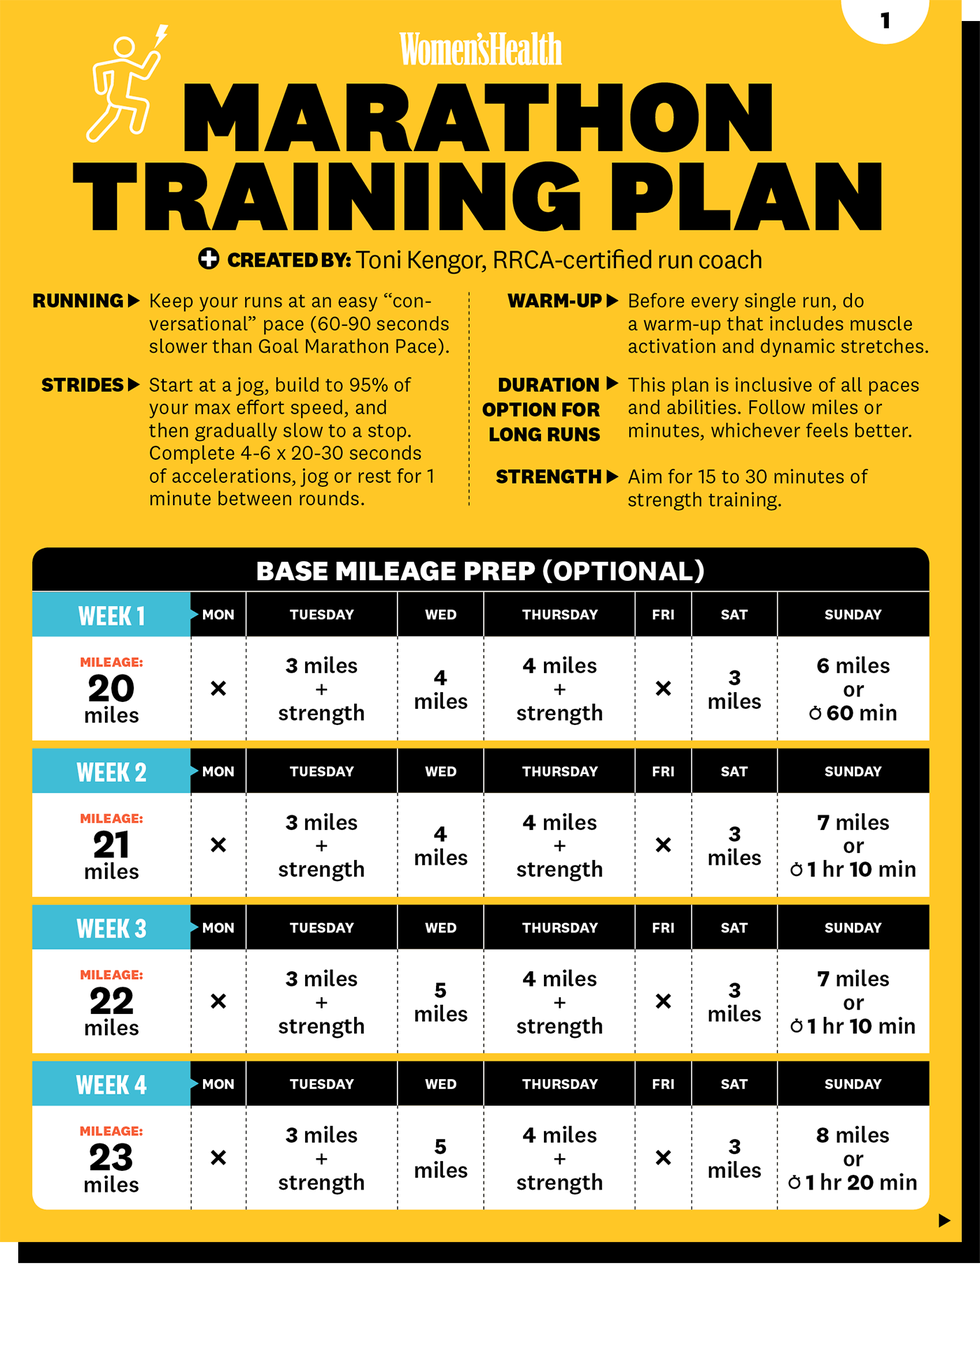 Marathon Training Plan For All Running Levels - Downloadable Pdf